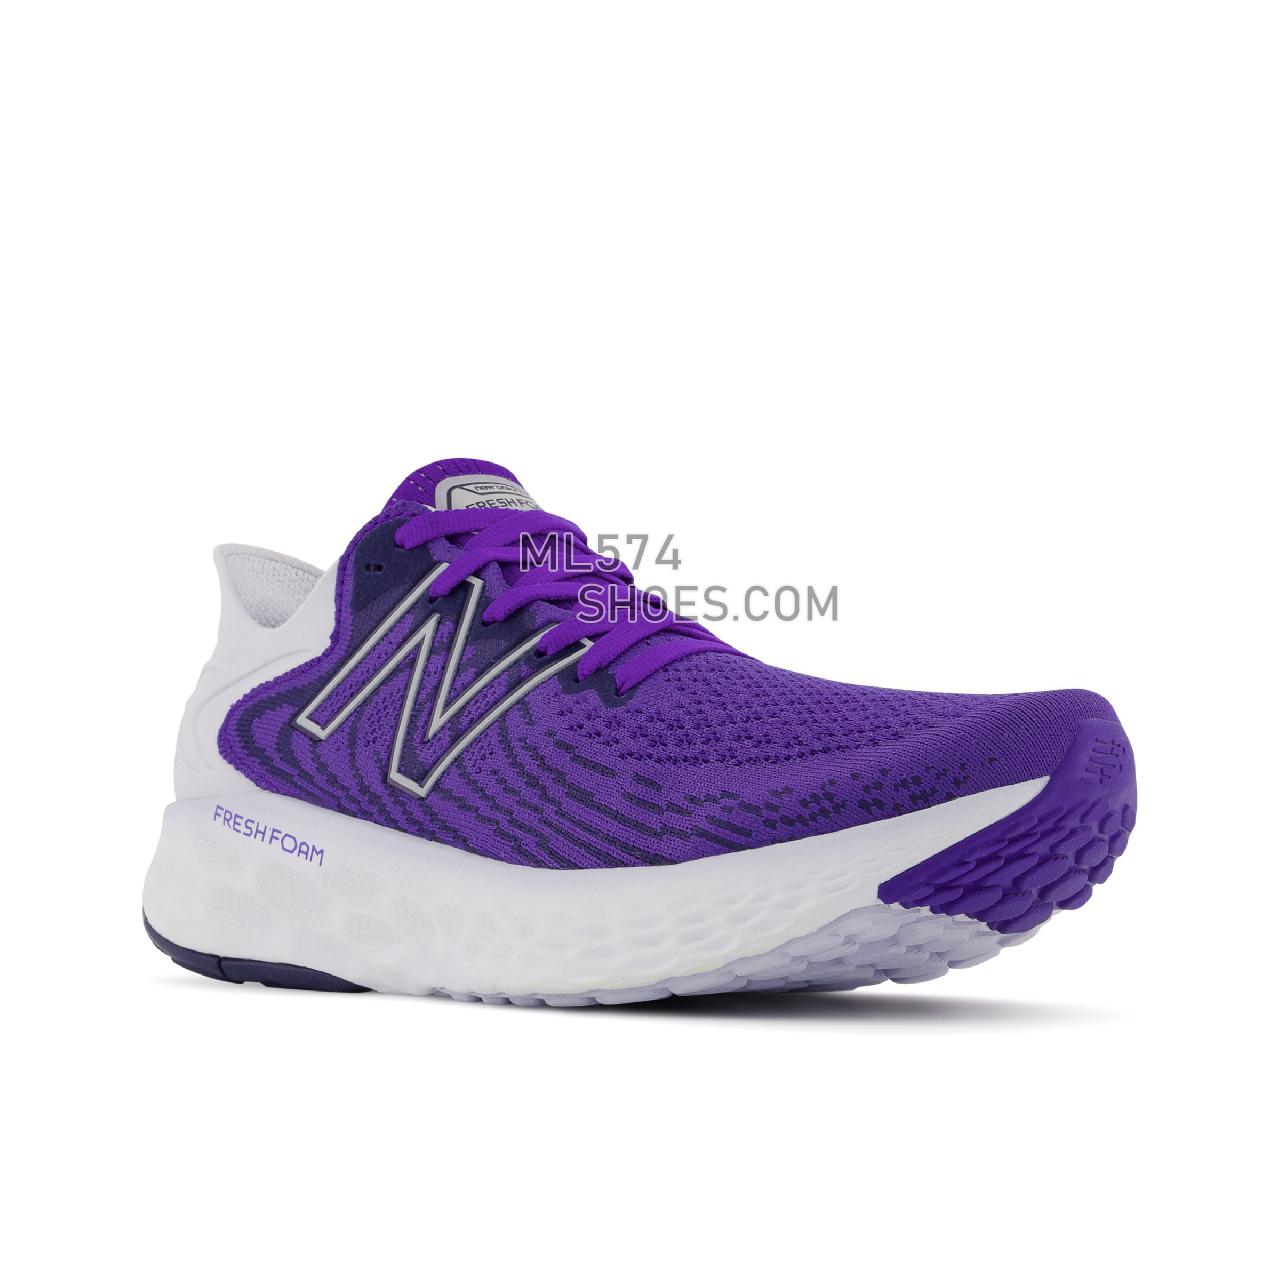 New Balance Fresh Foam 1080v11 - Women's Neutral Running - Deep Violet with Silent Grey - W1080U11